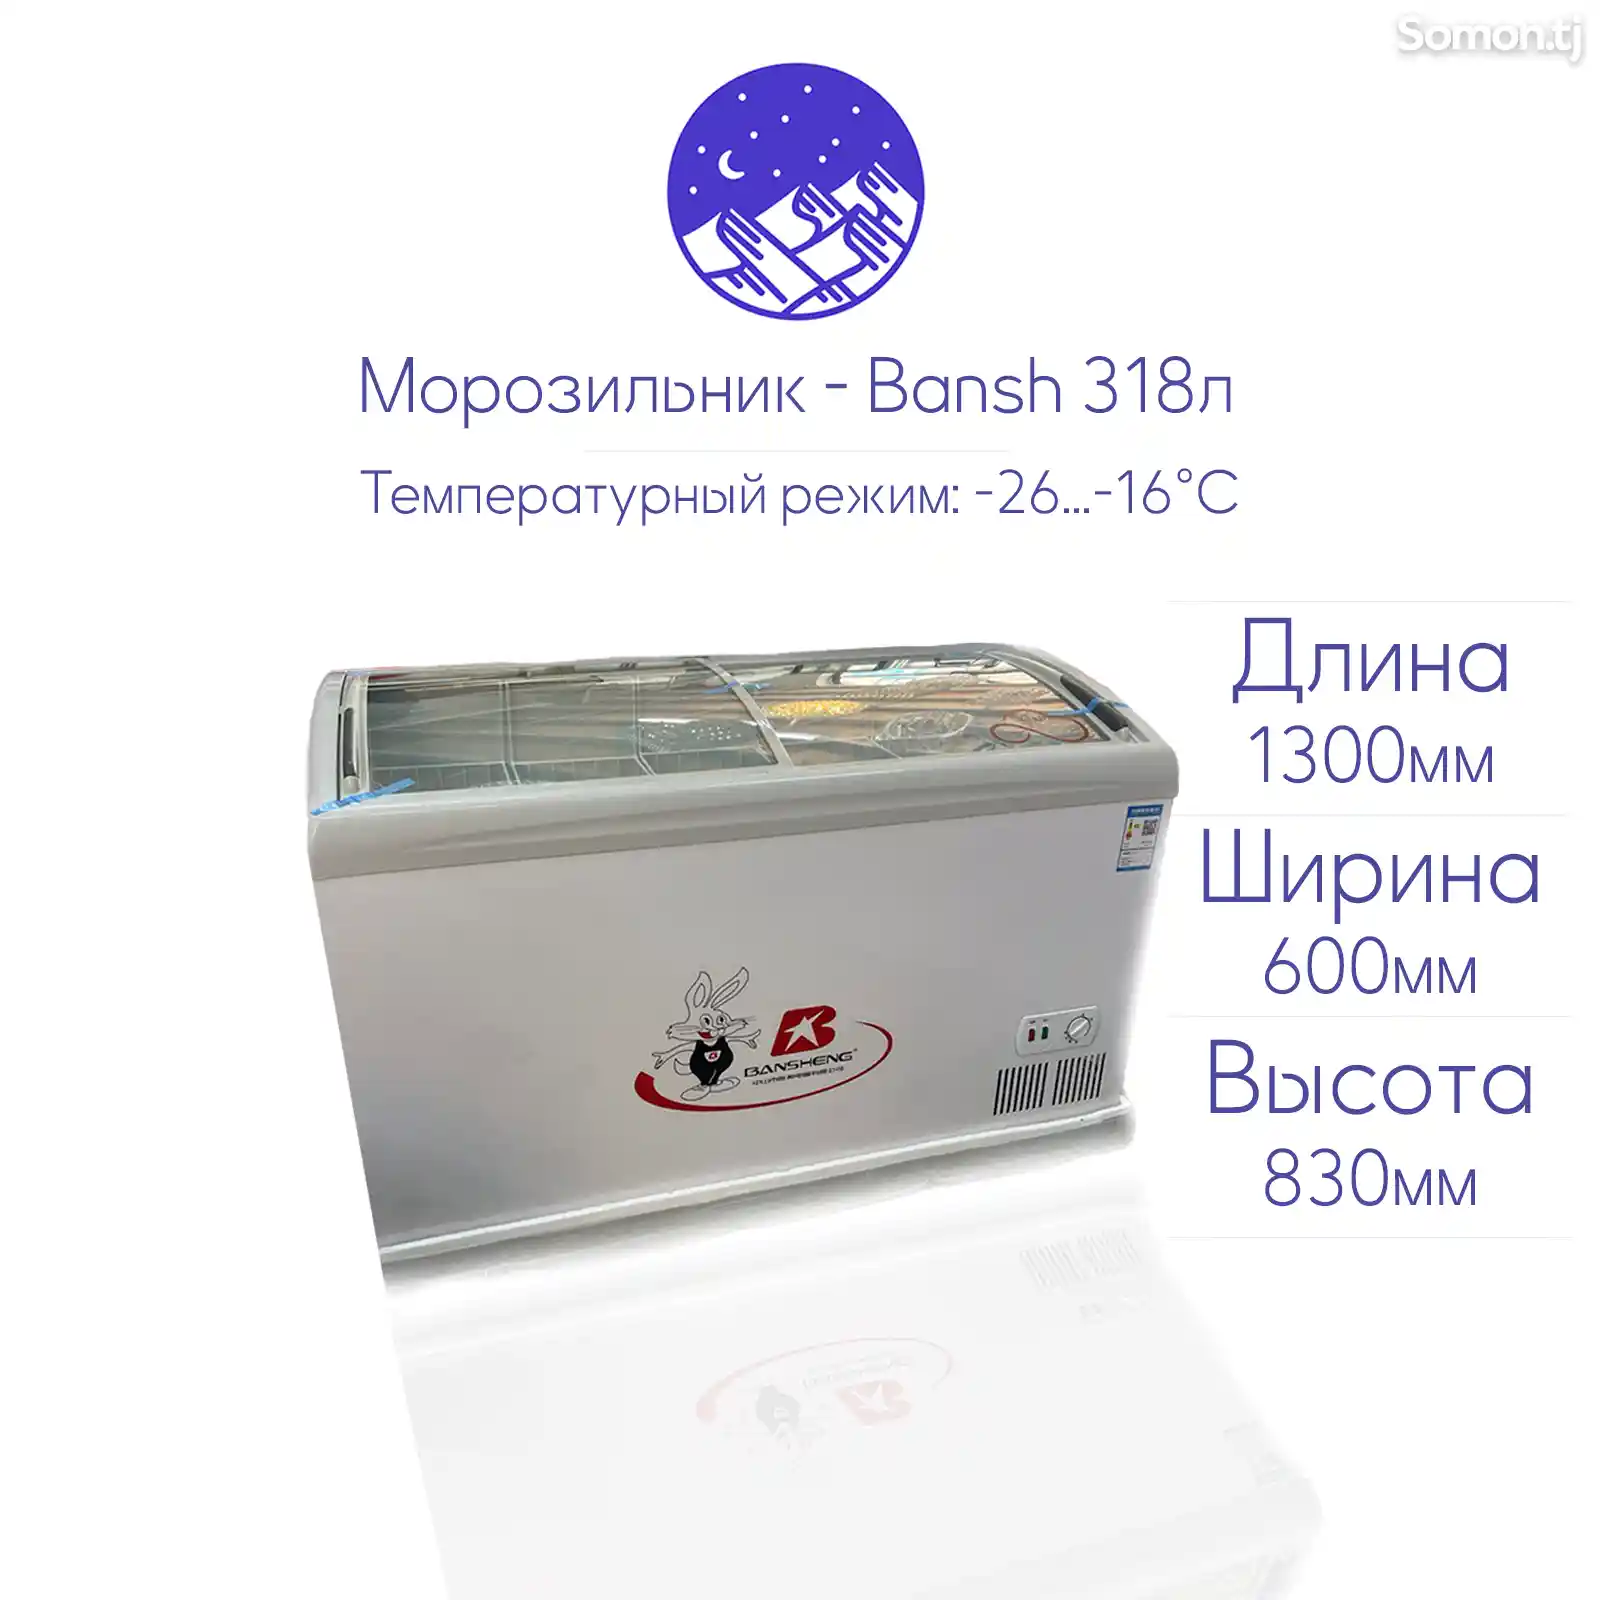 Морозильник Bansh - 318л-6